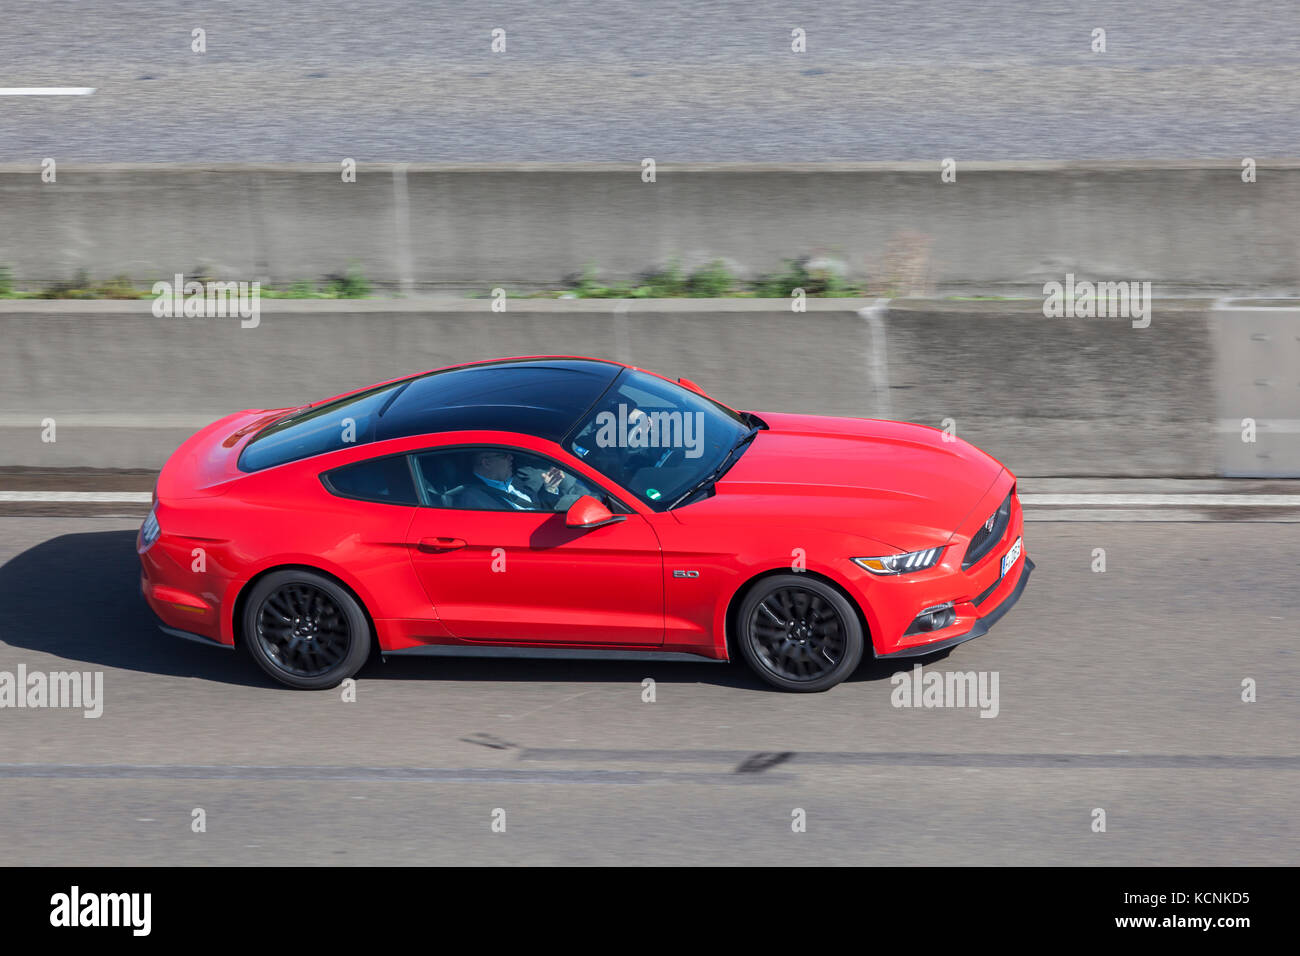 Francfort, Allemagne - Sep 19, 2017 : Ford Mustang rouge 5,0 voiture de sport sur la route en Allemagne Banque D'Images